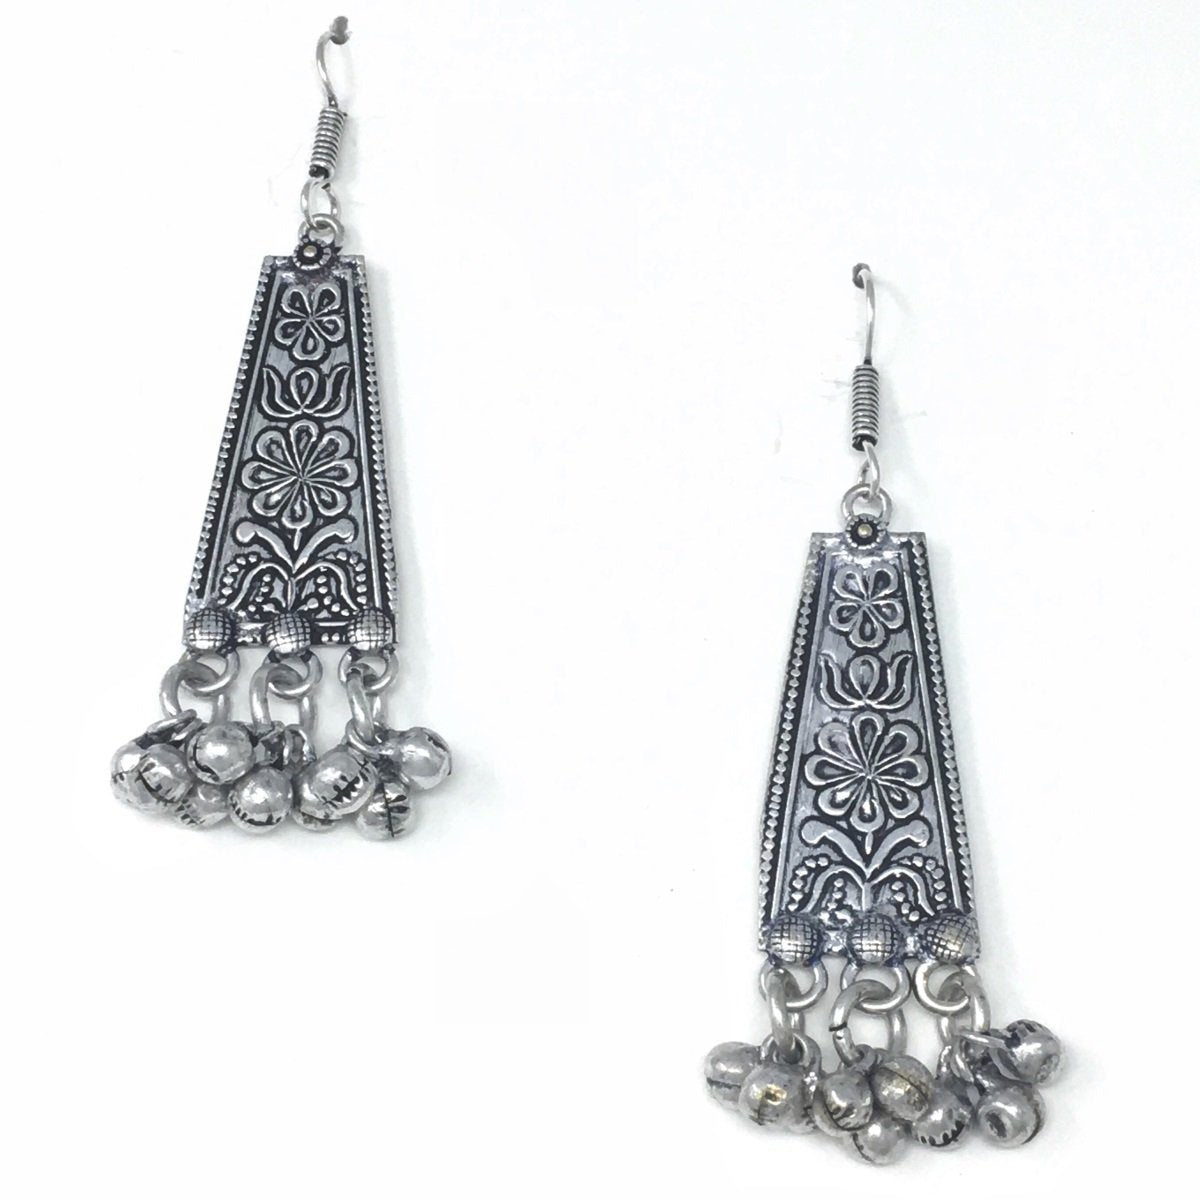 Oxidized Silver Long Floral Earrings